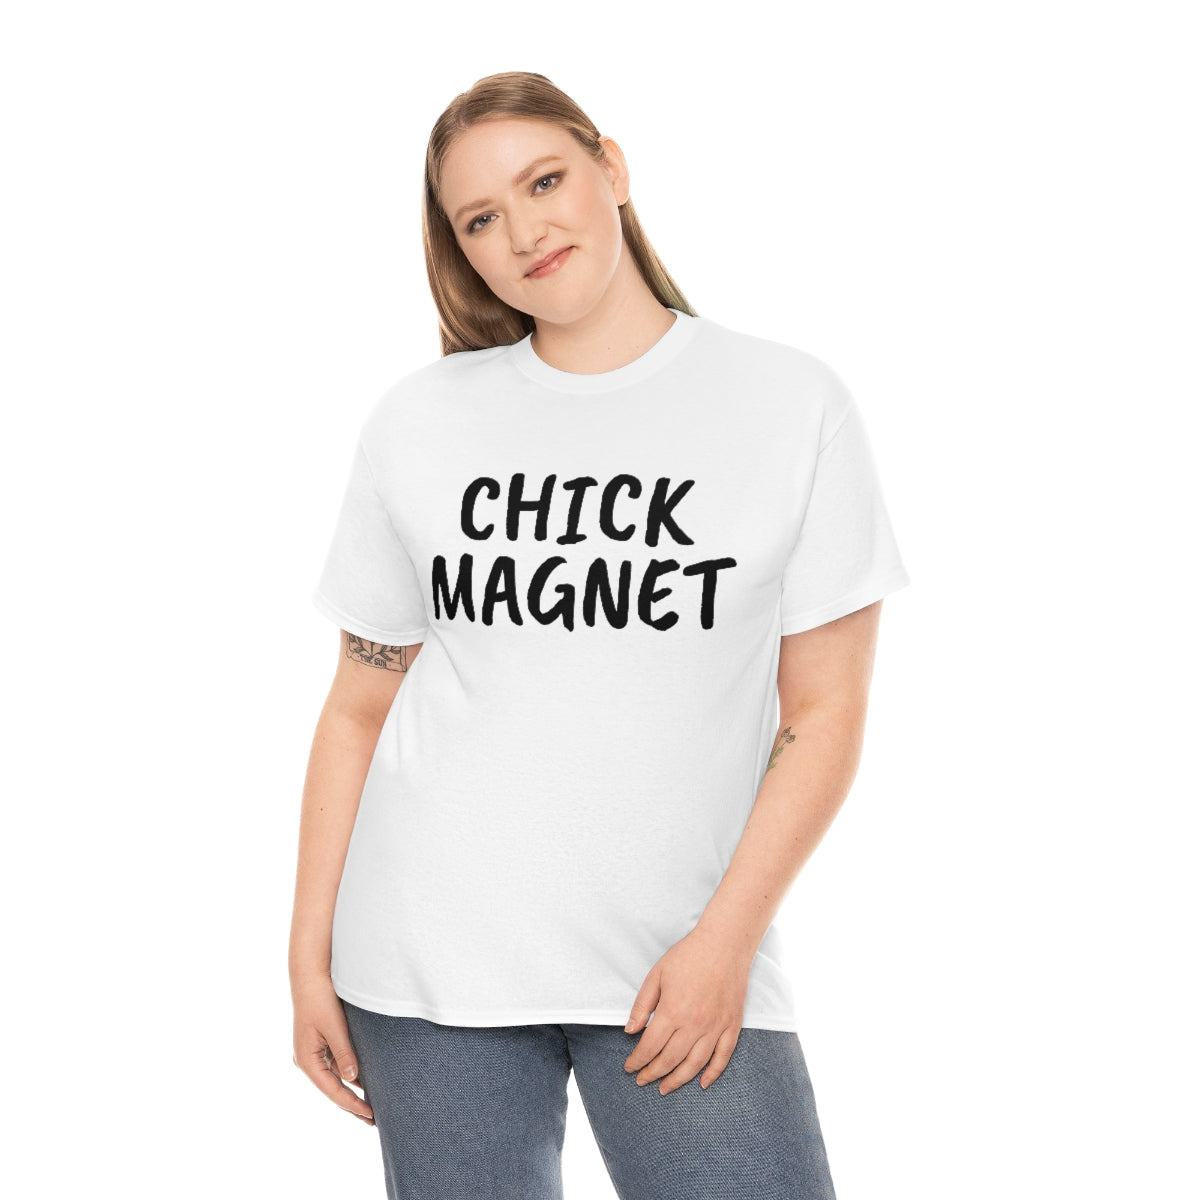 CHICK MAGNET T-SHIRT